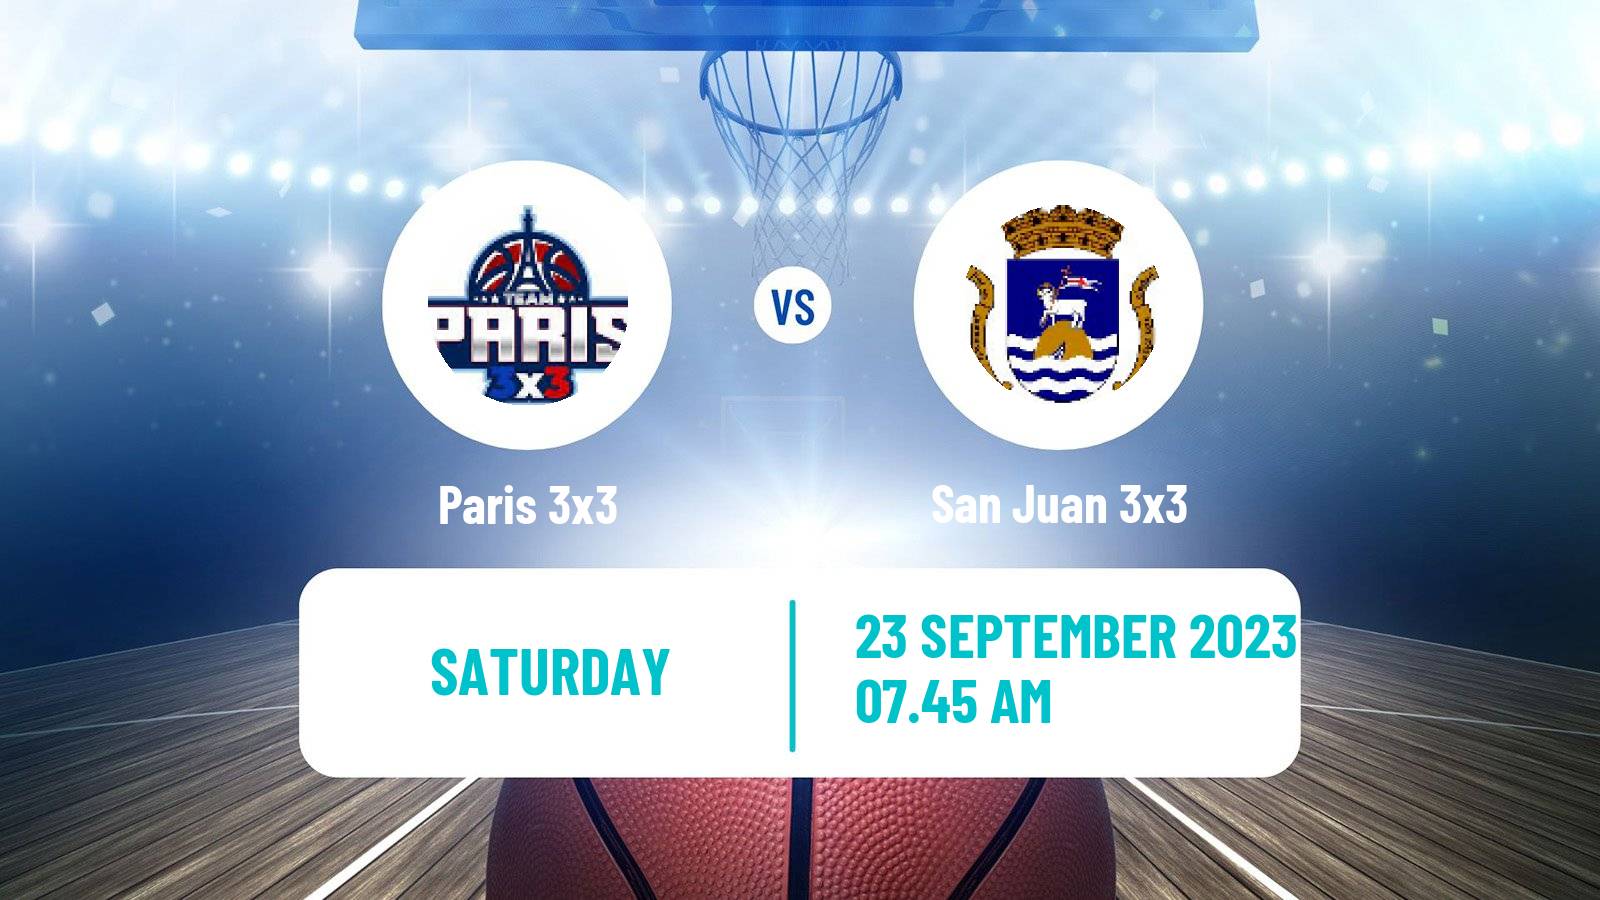 Basketball World Tour Сebu 3x3 Paris 3x3 - San Juan 3x3